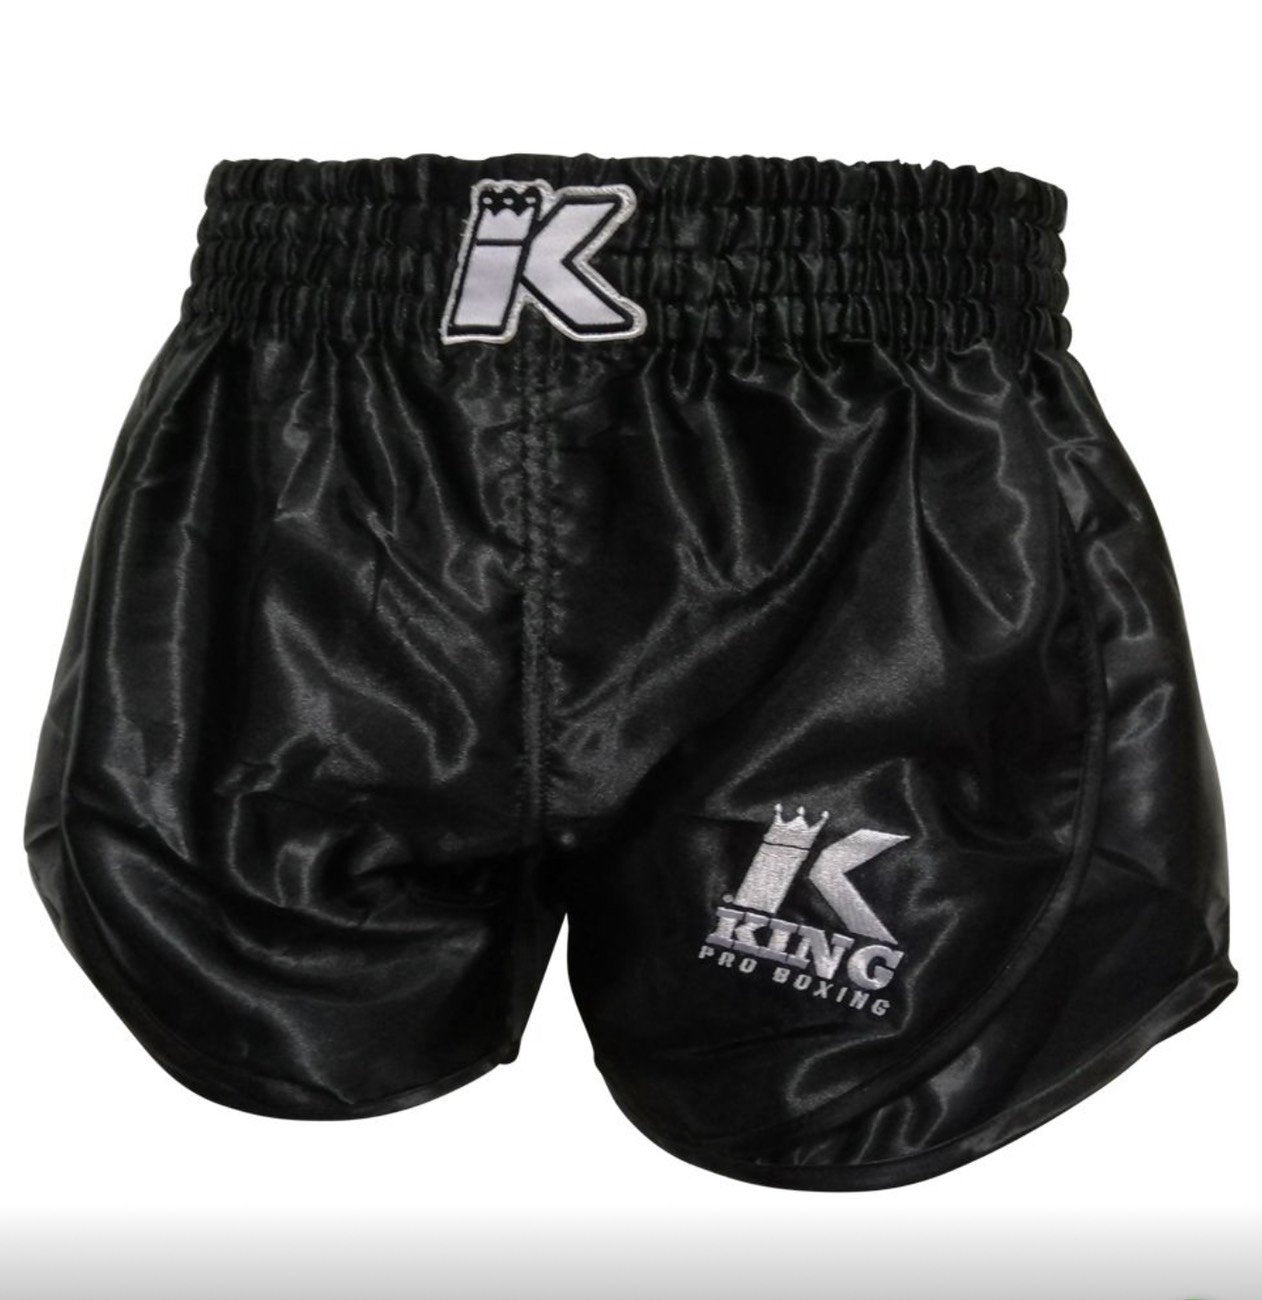 King Pro Boxing Shorts KPB Retro Hybryd 1